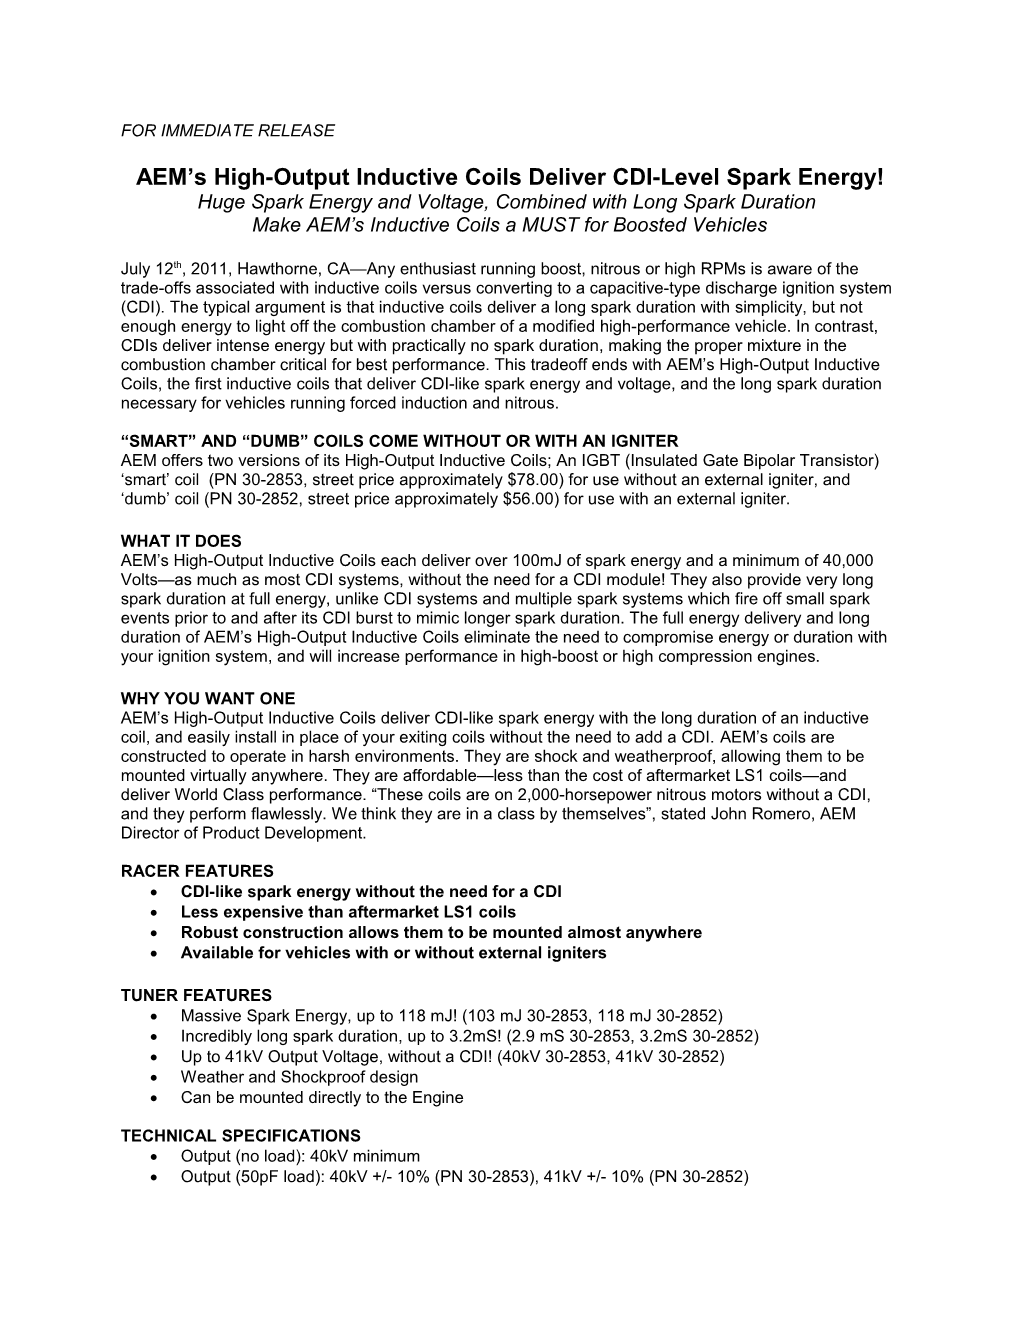 AEM S High-Output Inductive Coils Deliver CDI-Level Spark Energy!